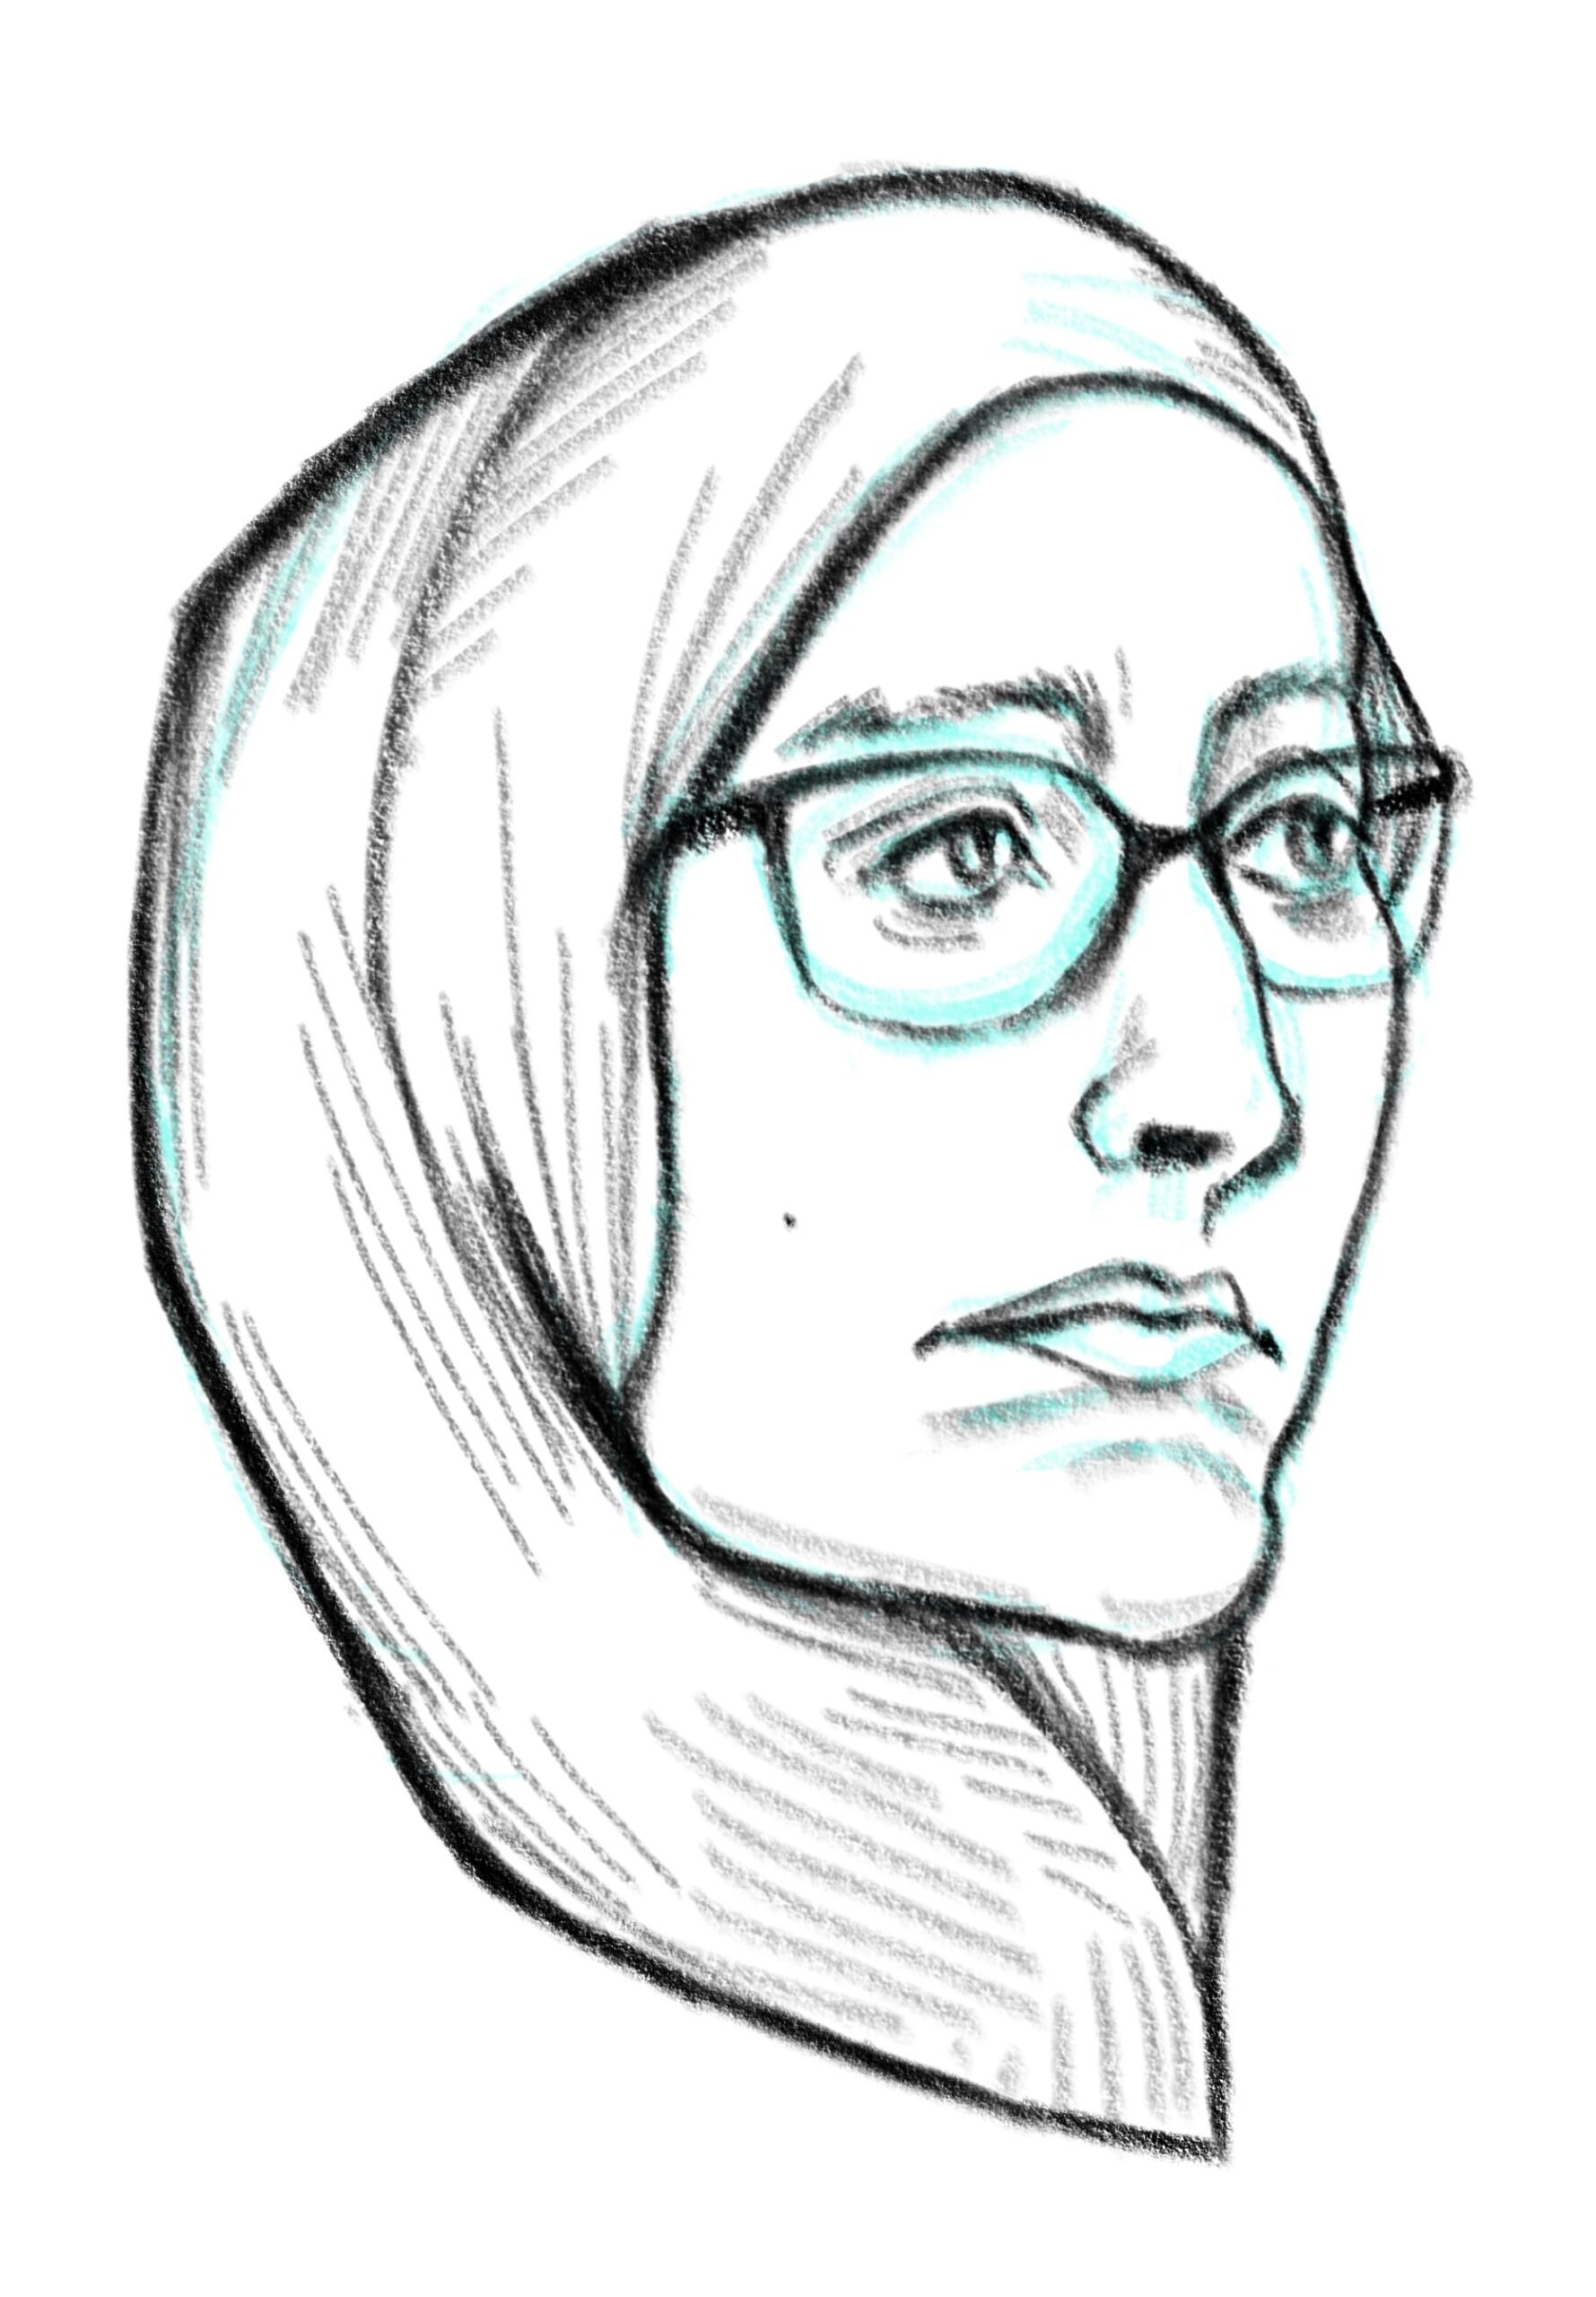 Amira Elghawaby on Islamophobia in Canada